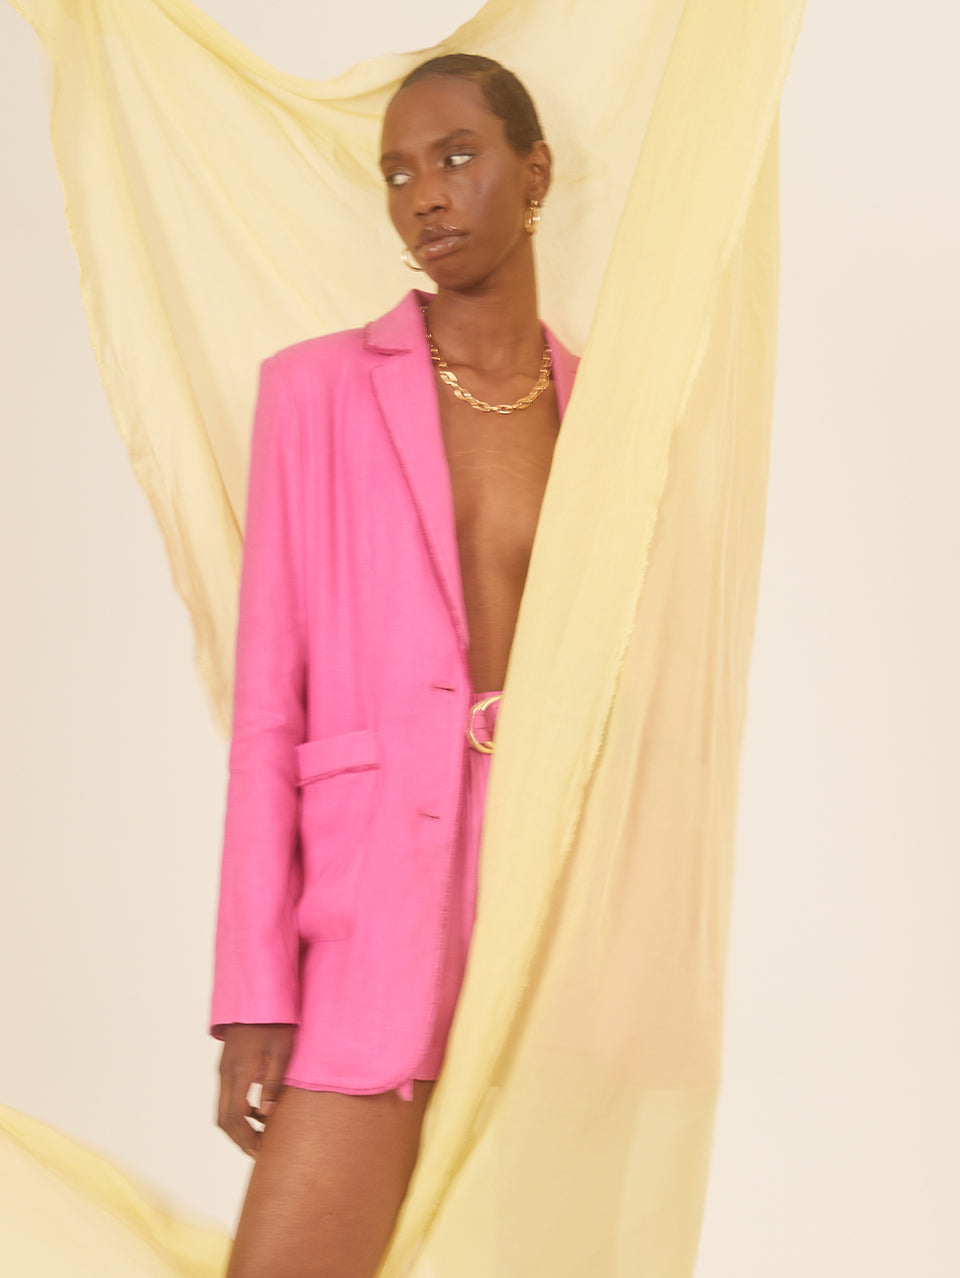 Angelina Jacket Pink KIVARI | Model wears hot pink jacket campaign